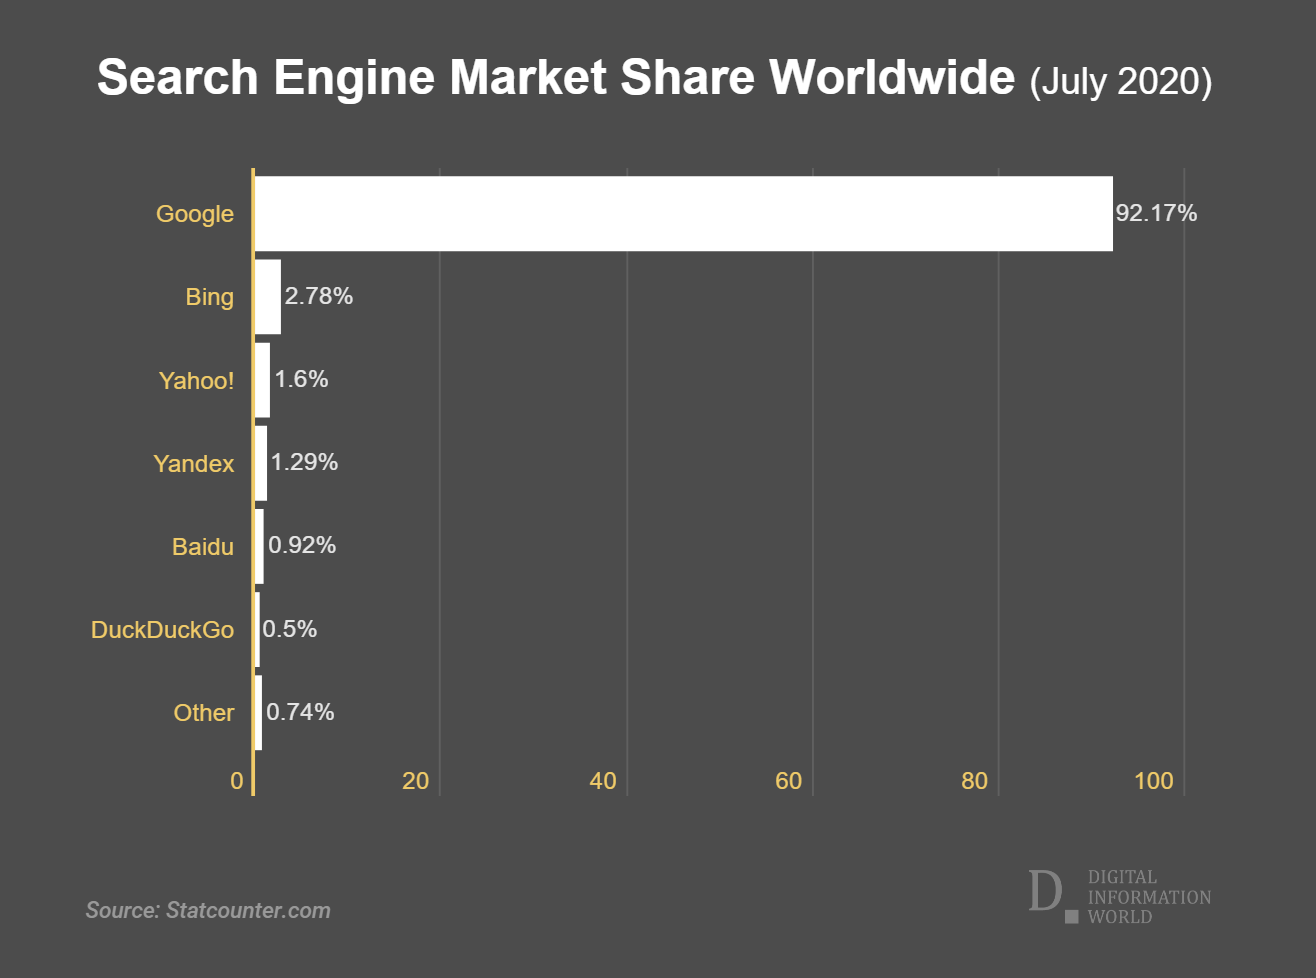 Search engine market share, courtesy of Digital Information World.